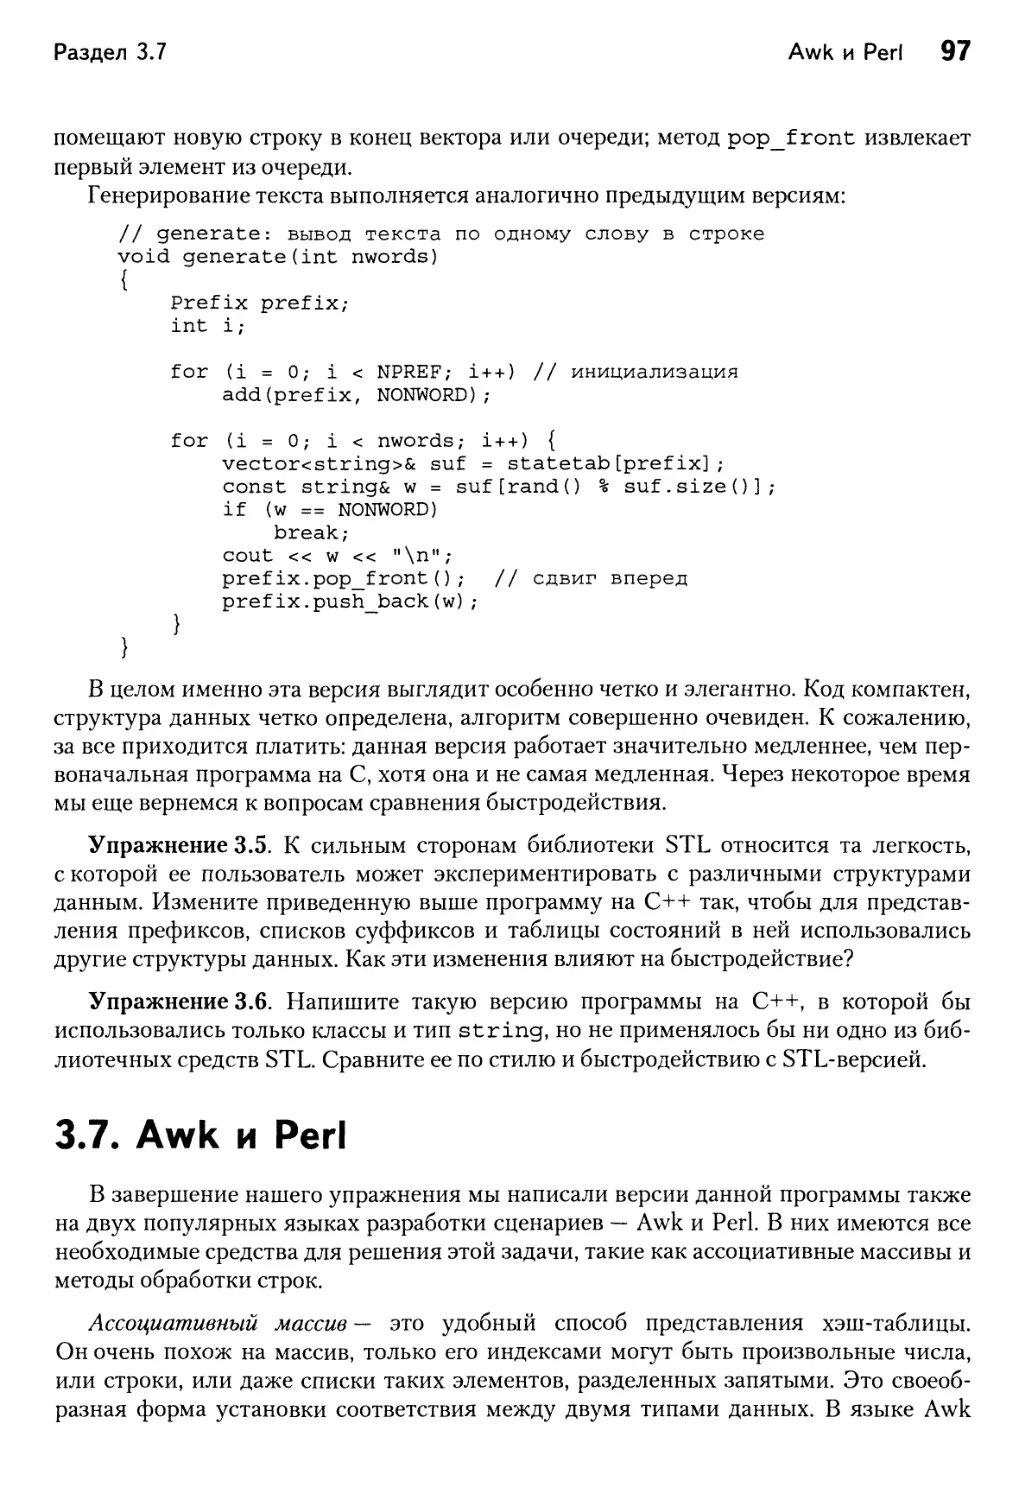 3.7. Awk и Perl